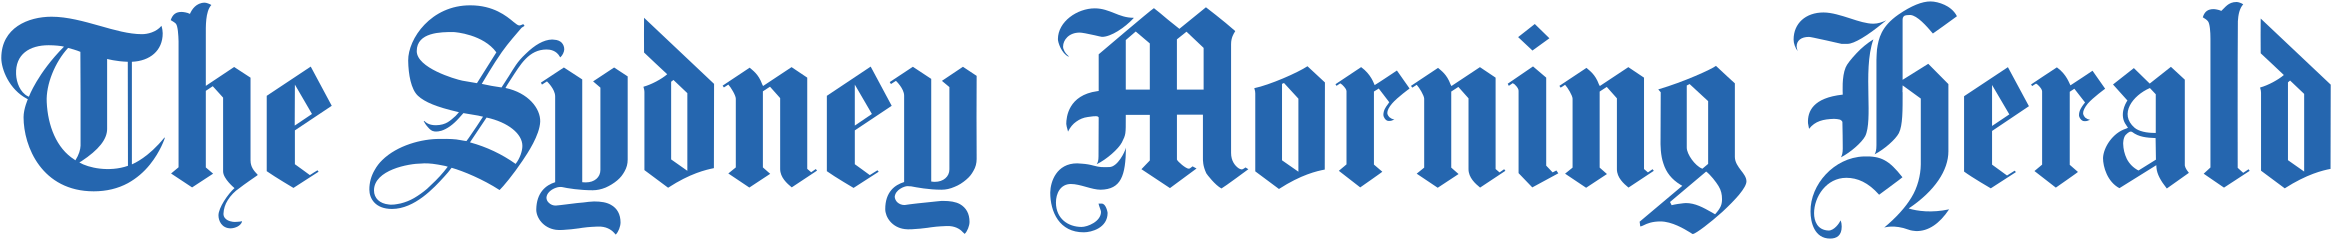 The Sydney Morning Herald Logo Png Transparent - Sydney Morning Herald Clipart (2400x2400), Png Download